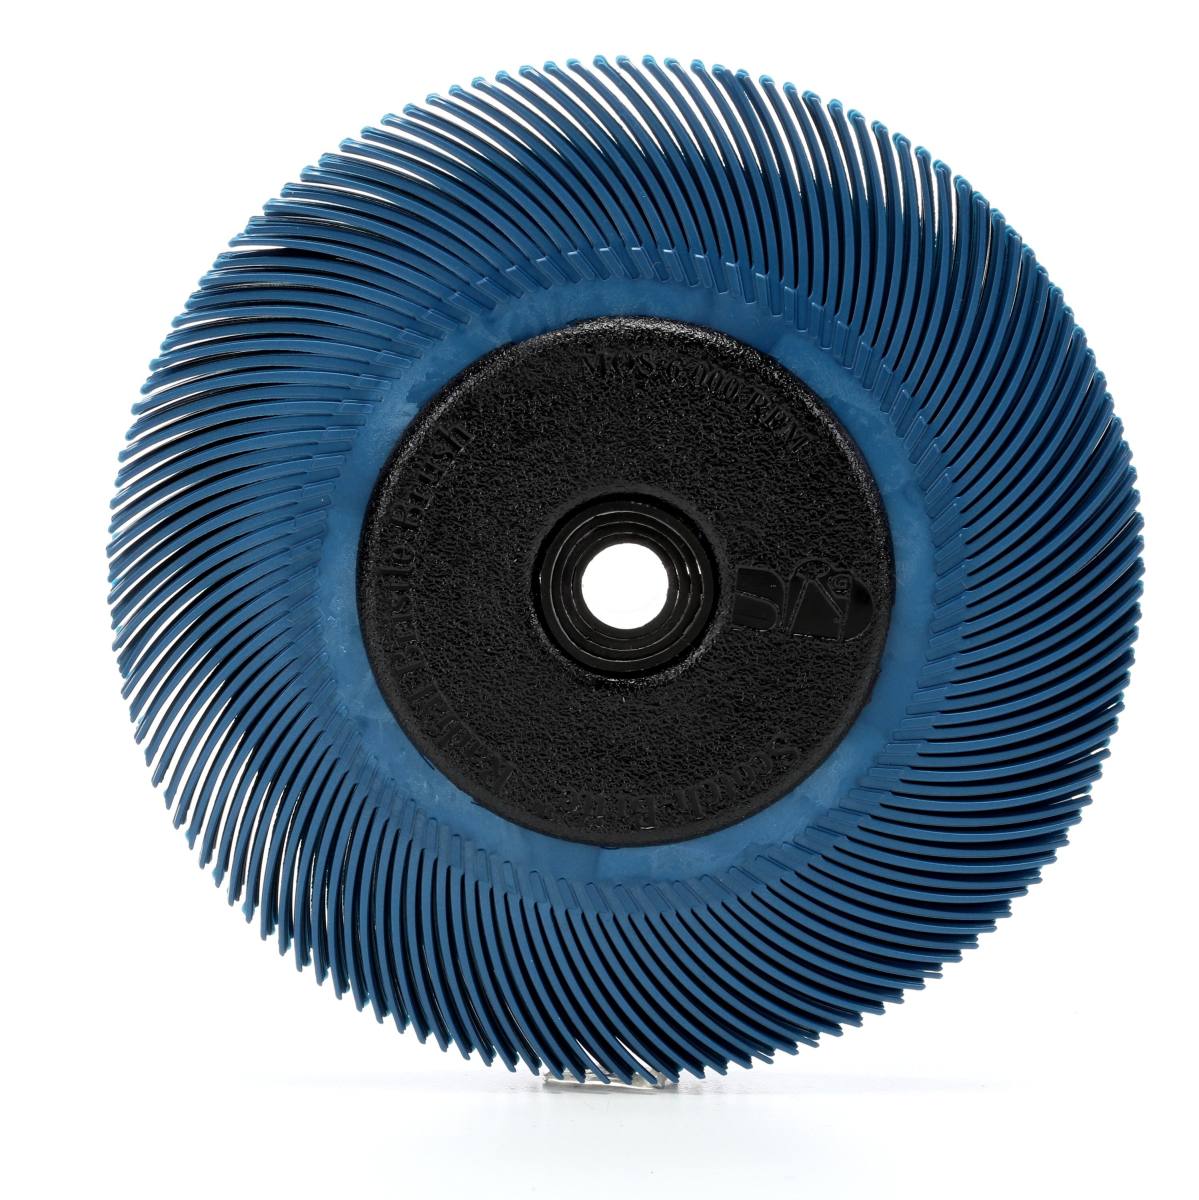 3M Scotch-Brite Radial Bristle Disc BB-ZB with flange, blue, 152.4 mm, P400, type C #33214